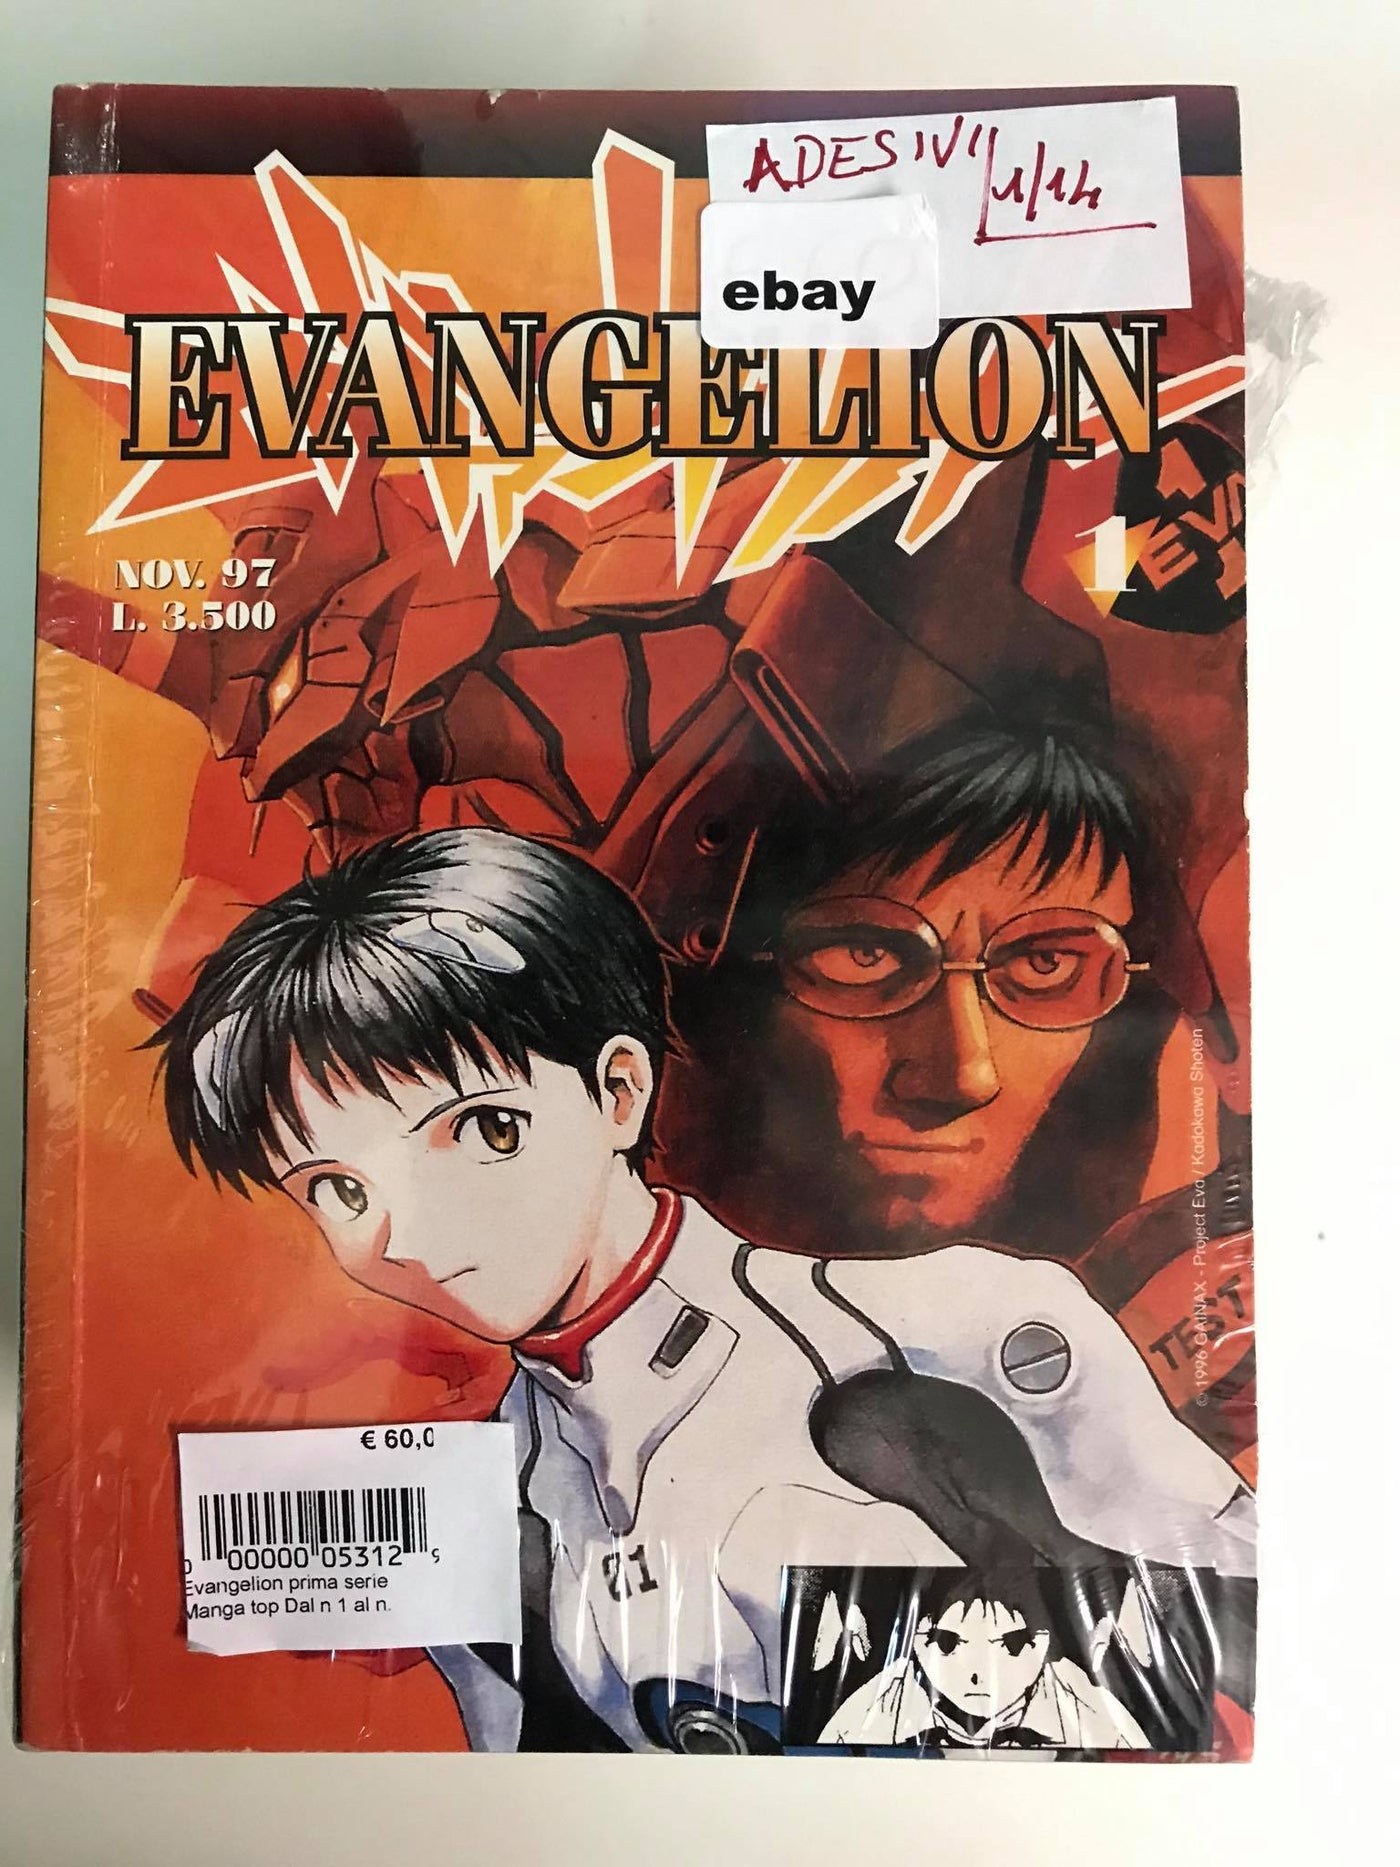 COMPLETE E SEQUENZE Evangelion prima serie Manga top Dal n 1 al n